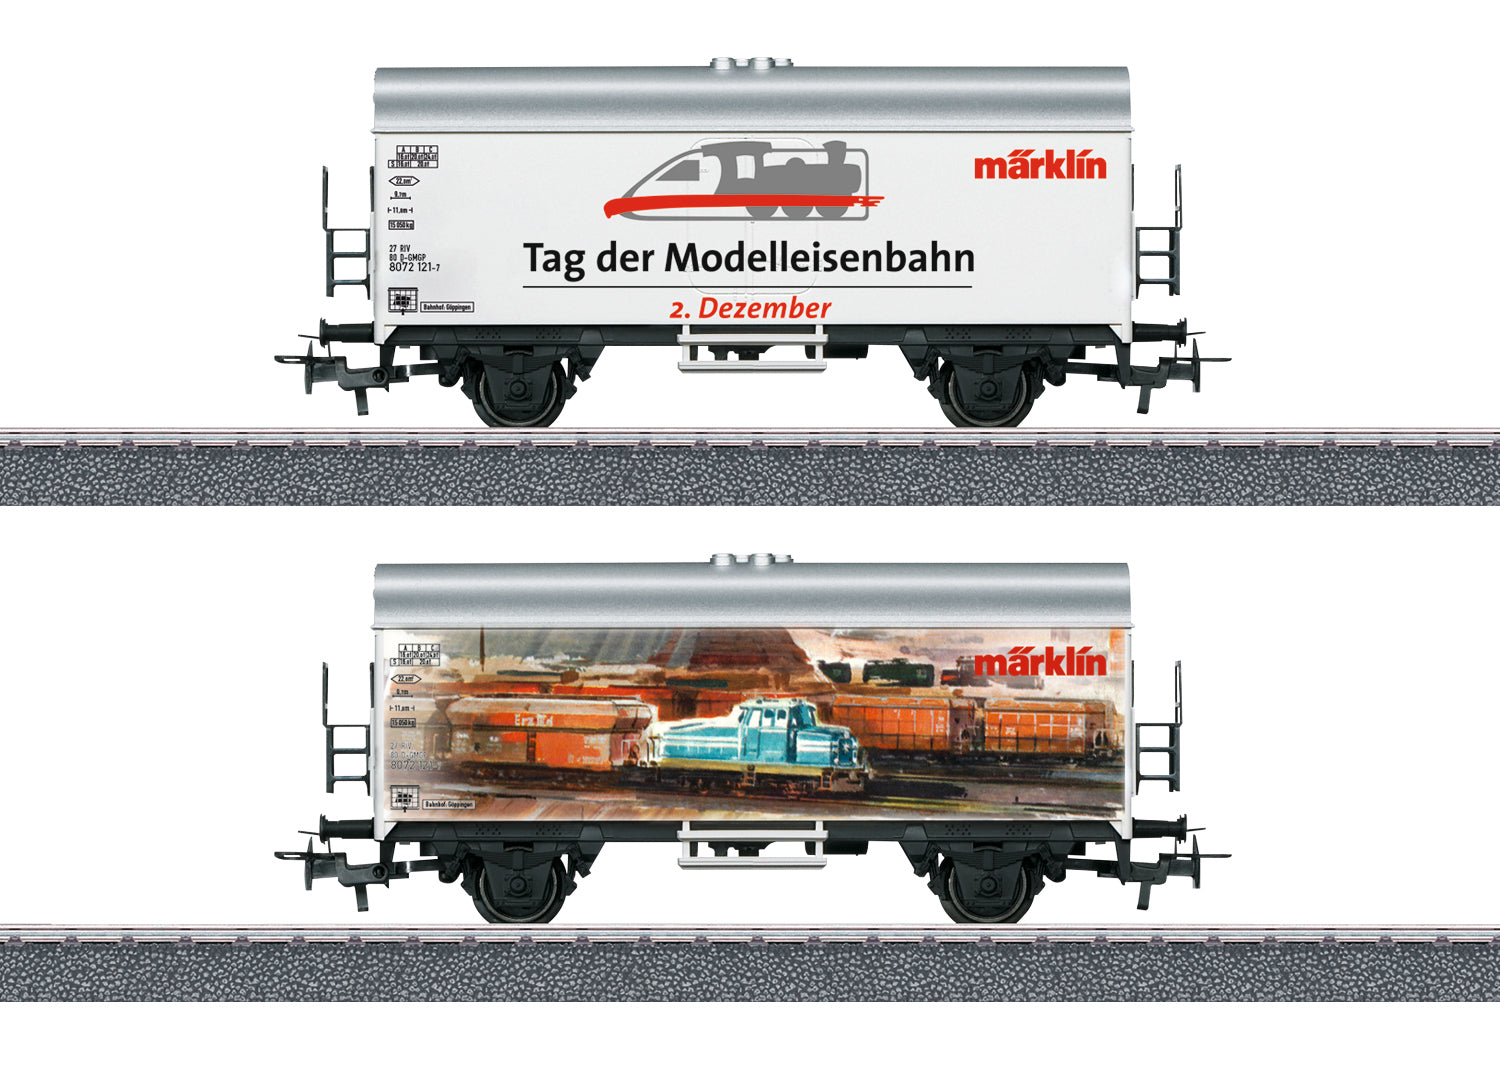 Marklin HO 44260 International Model Railroading Day 2019 Refrigerator Car (both sides shown)